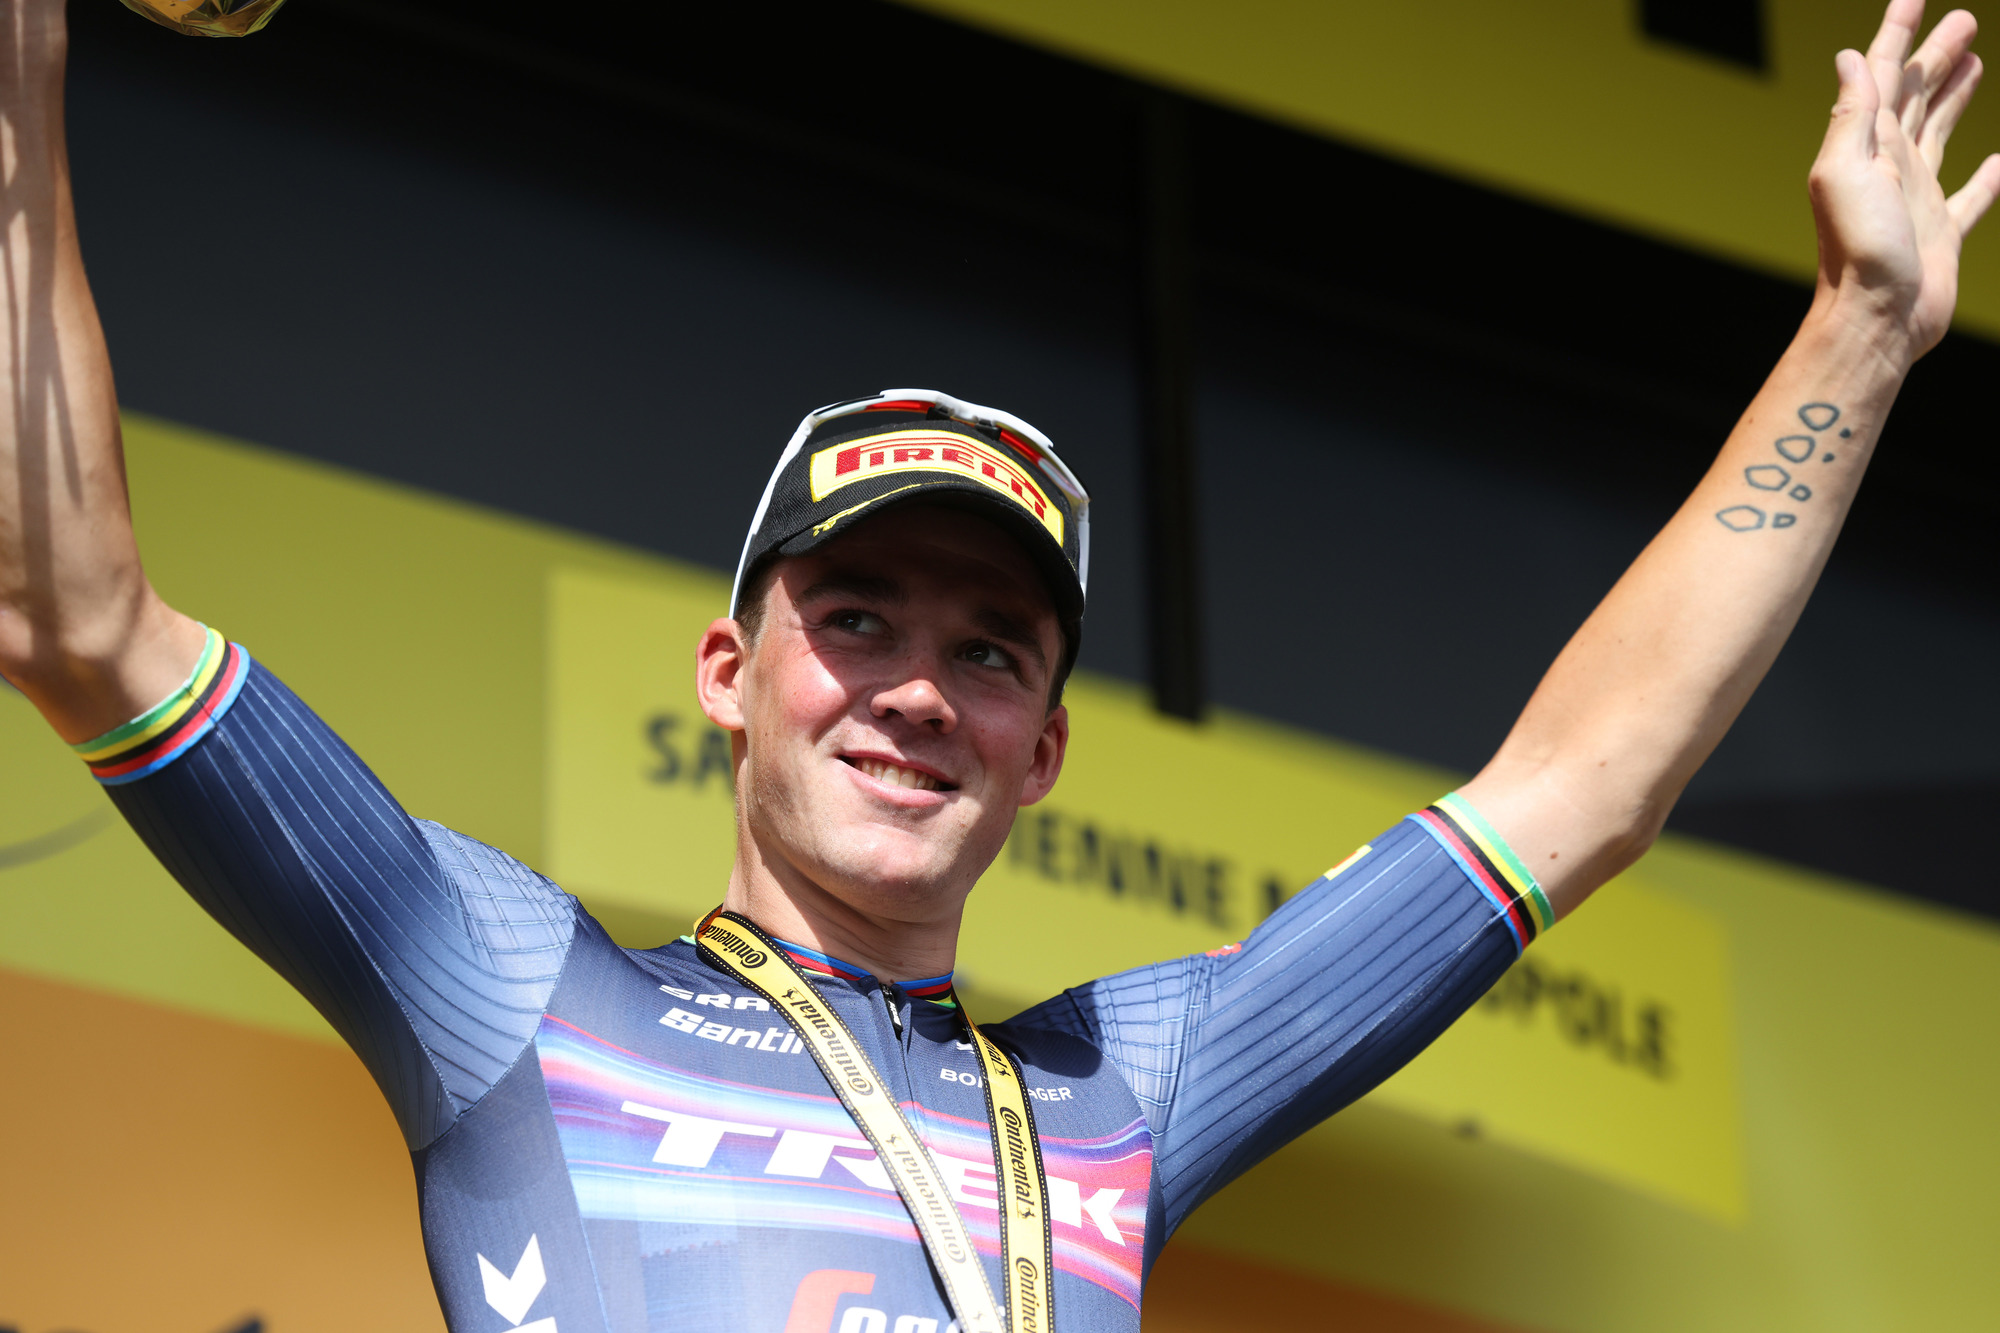 Denmark's 'big generation' showing itself at the Tour de France, says Pedersen